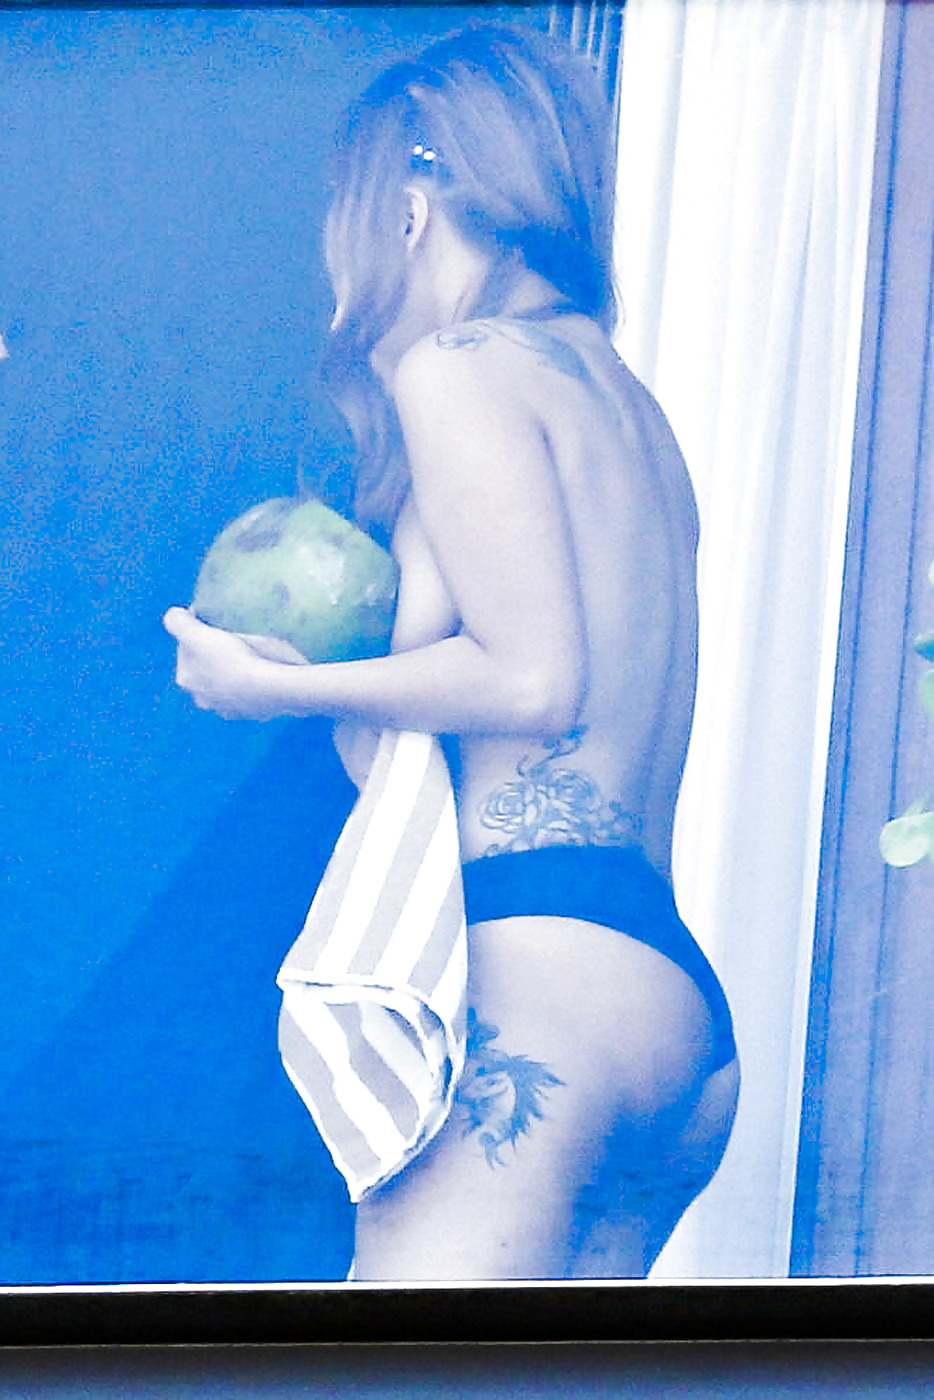 Lady Gaga Goes Nearly Nude on Hotel Balcony #17503948